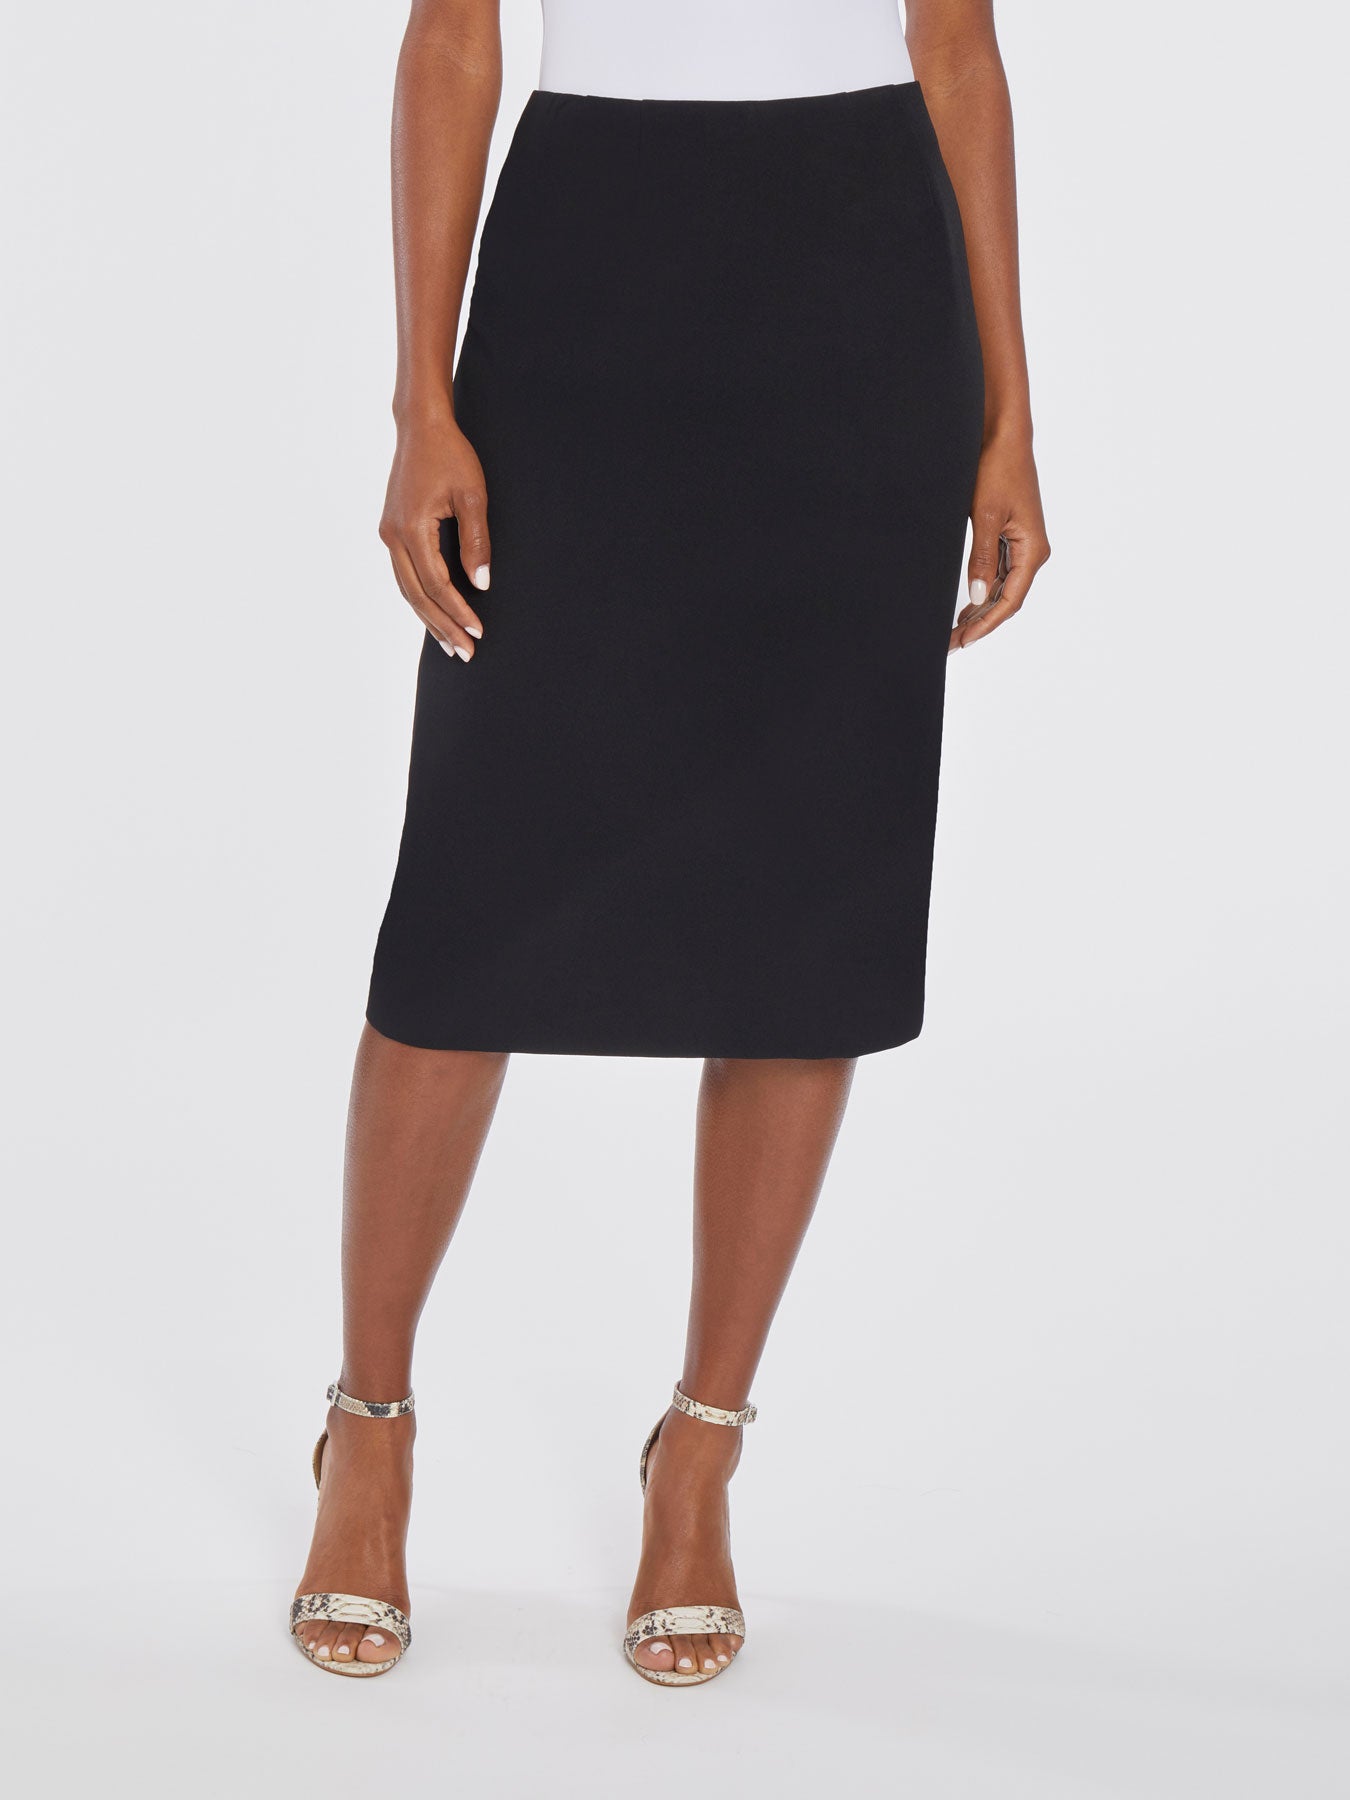 Knee Length High Waist Stretch Pencil Skirt - Black/Small at